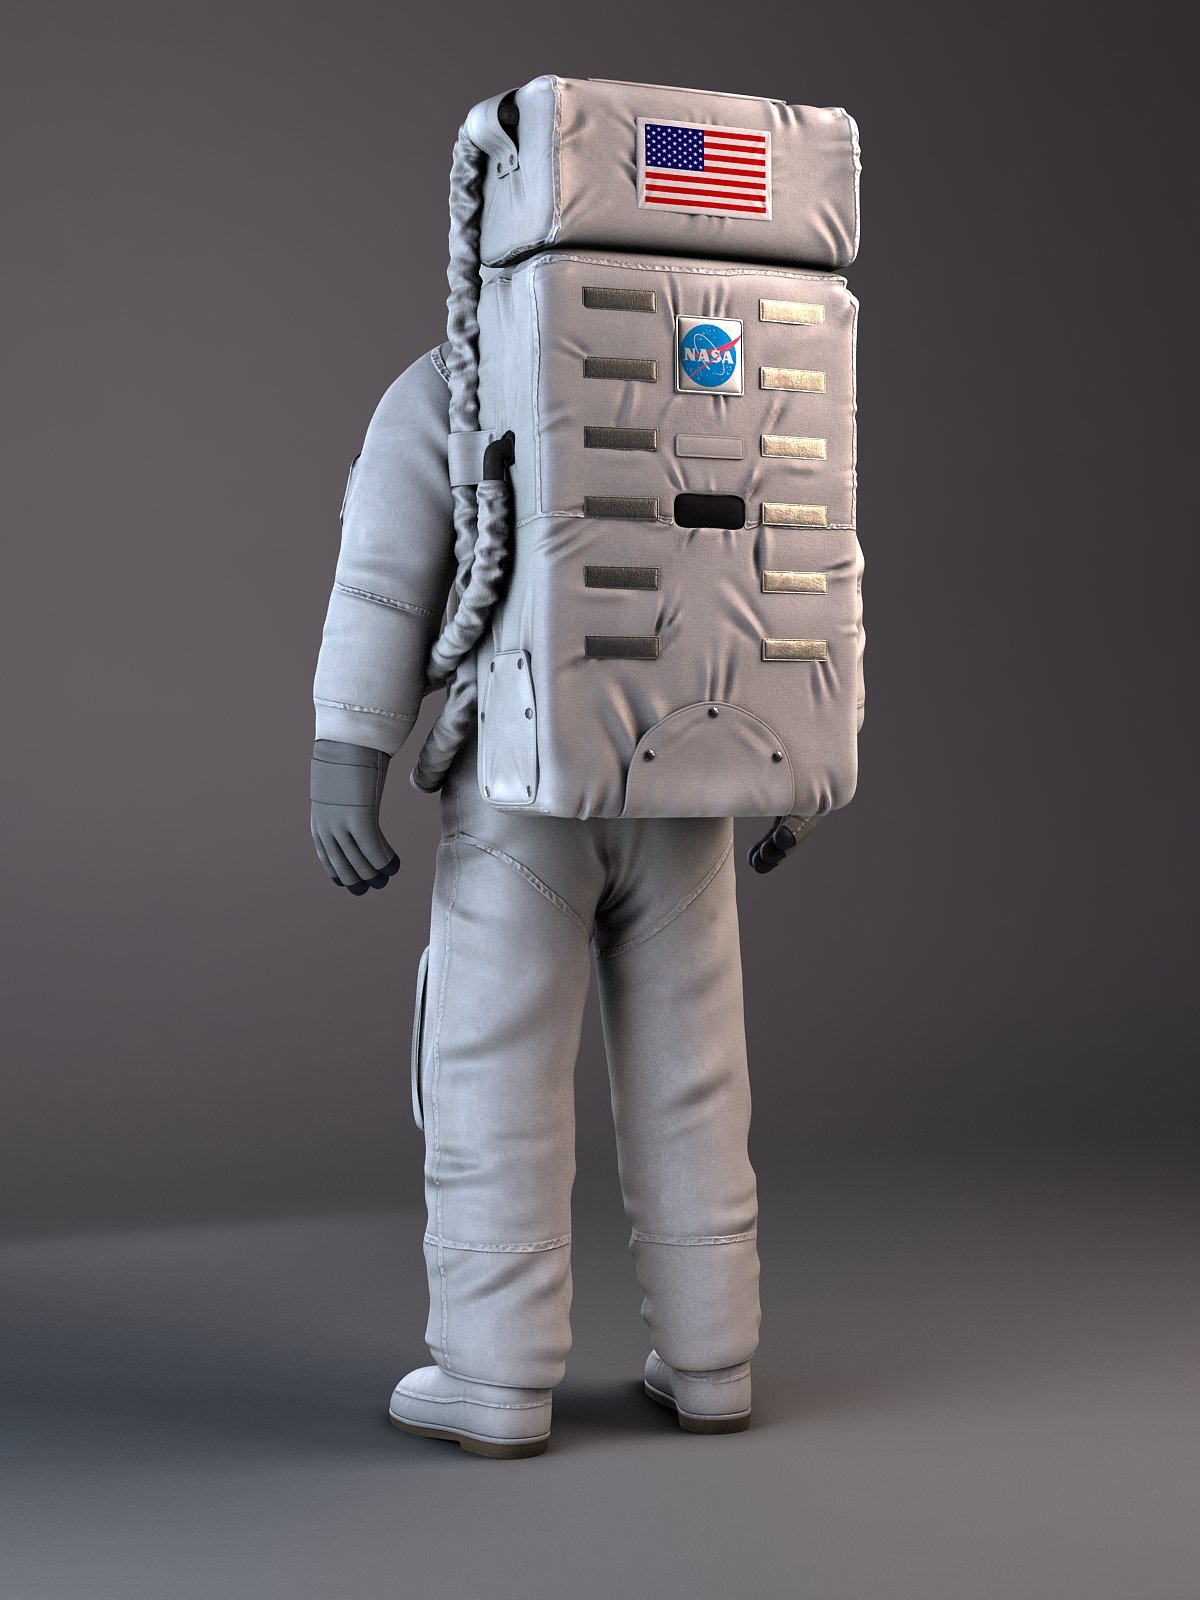 Гига скафандр мод 4. Скафандр Аполлон 11. Аполлон 11 3d model. НАСА рюкзак астронавт. Одежда Космонавта.